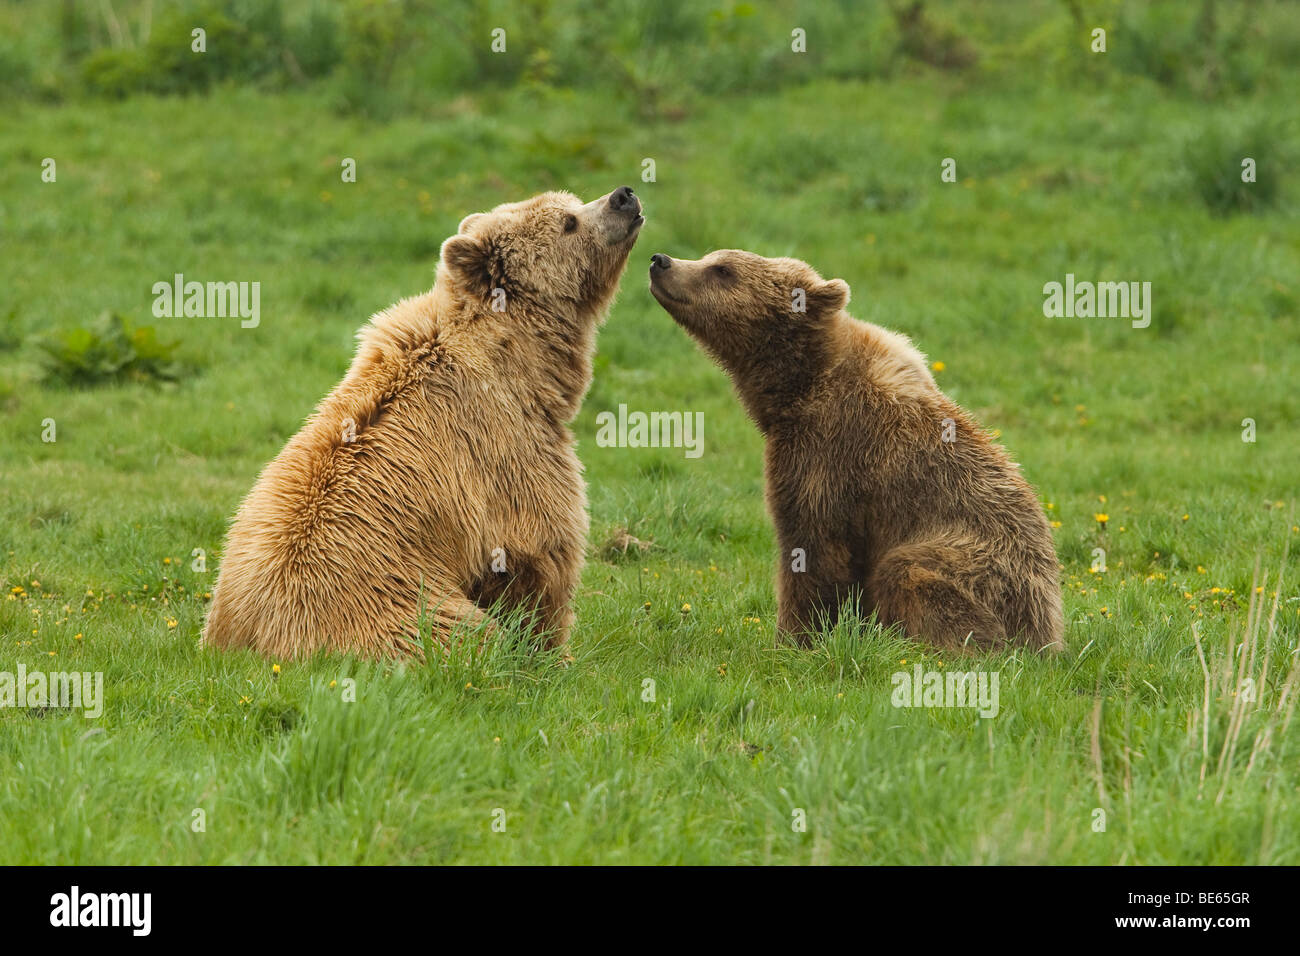 Unione l'orso bruno (Ursus arctos). Seminare con cub seduto su un prato. Foto Stock